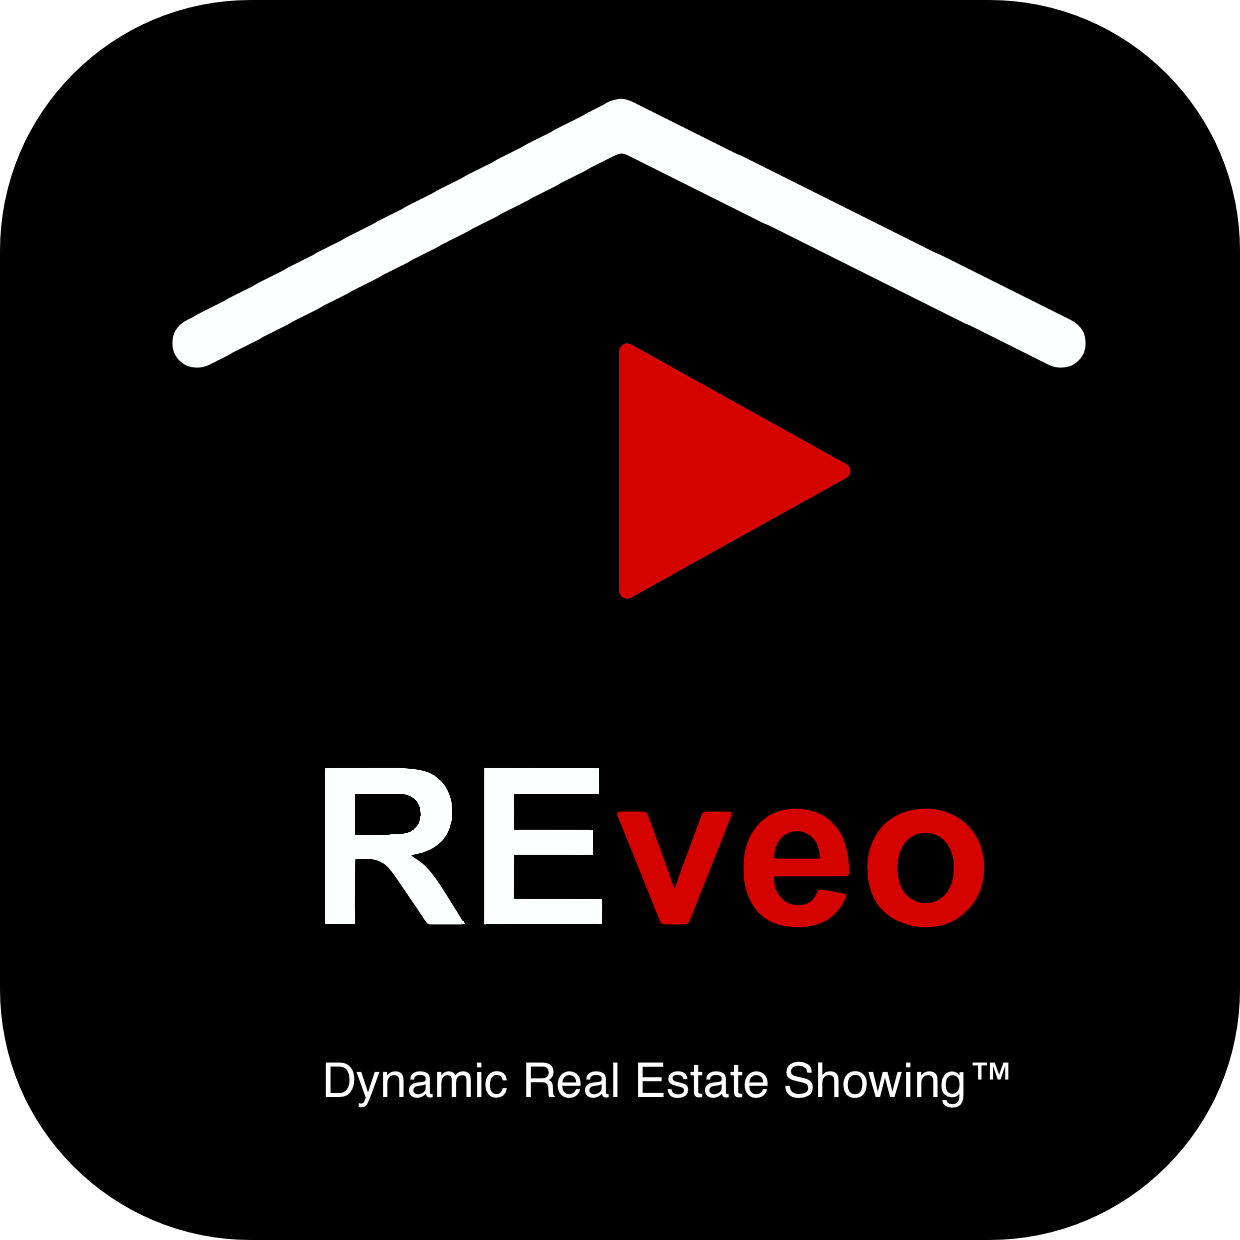 Reveo Logo 2021